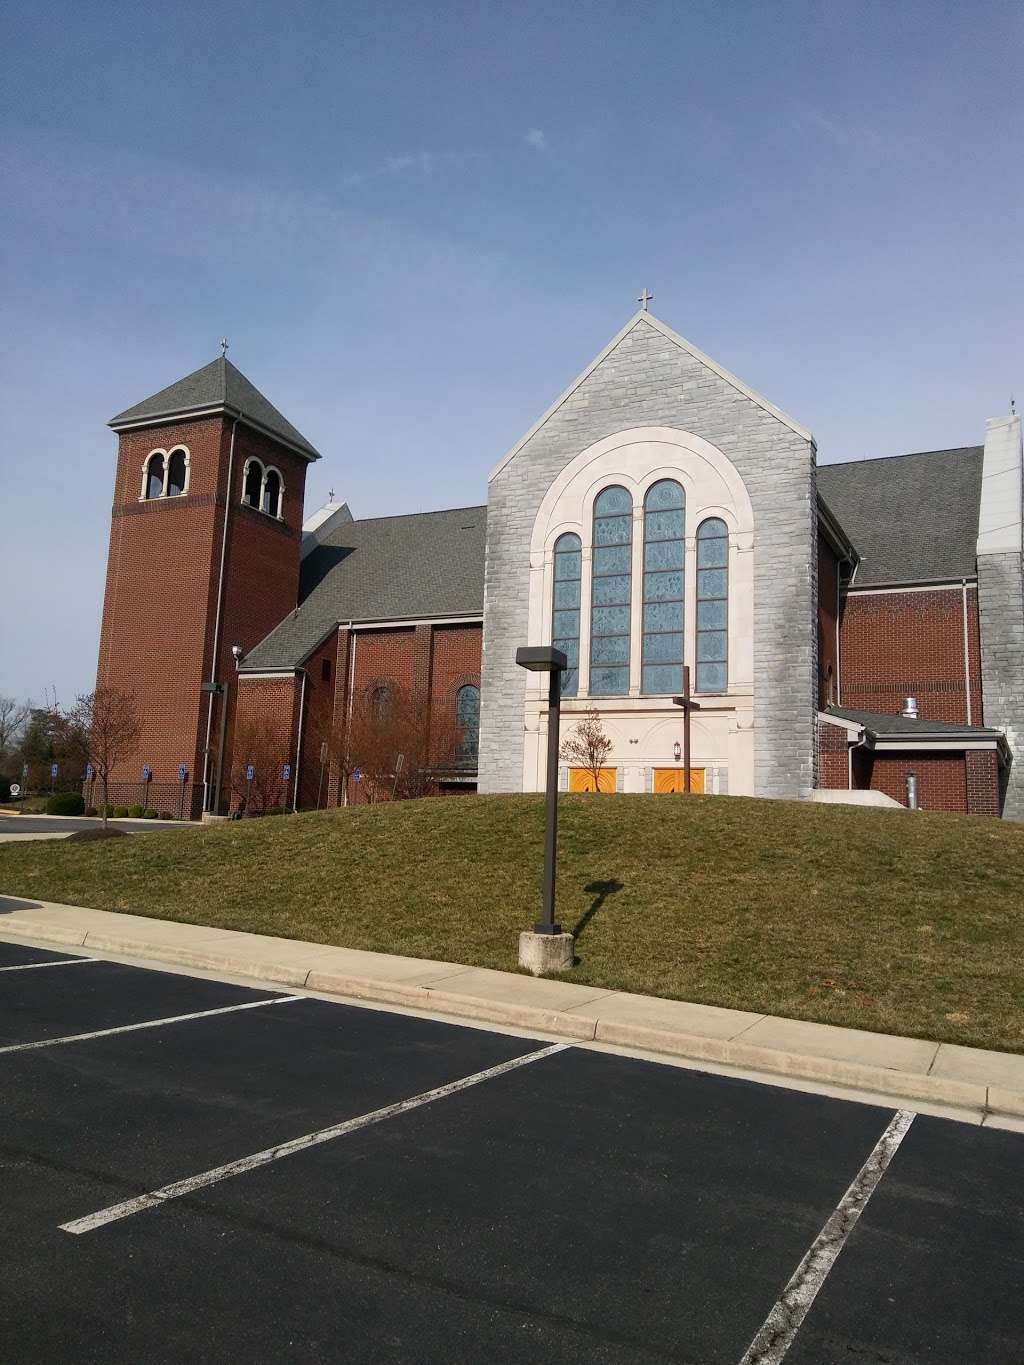 St. Raymond of Peñafort Roman Catholic Church | 8750 Pohick Rd, Springfield, VA 22153 | Phone: (703) 440-0535